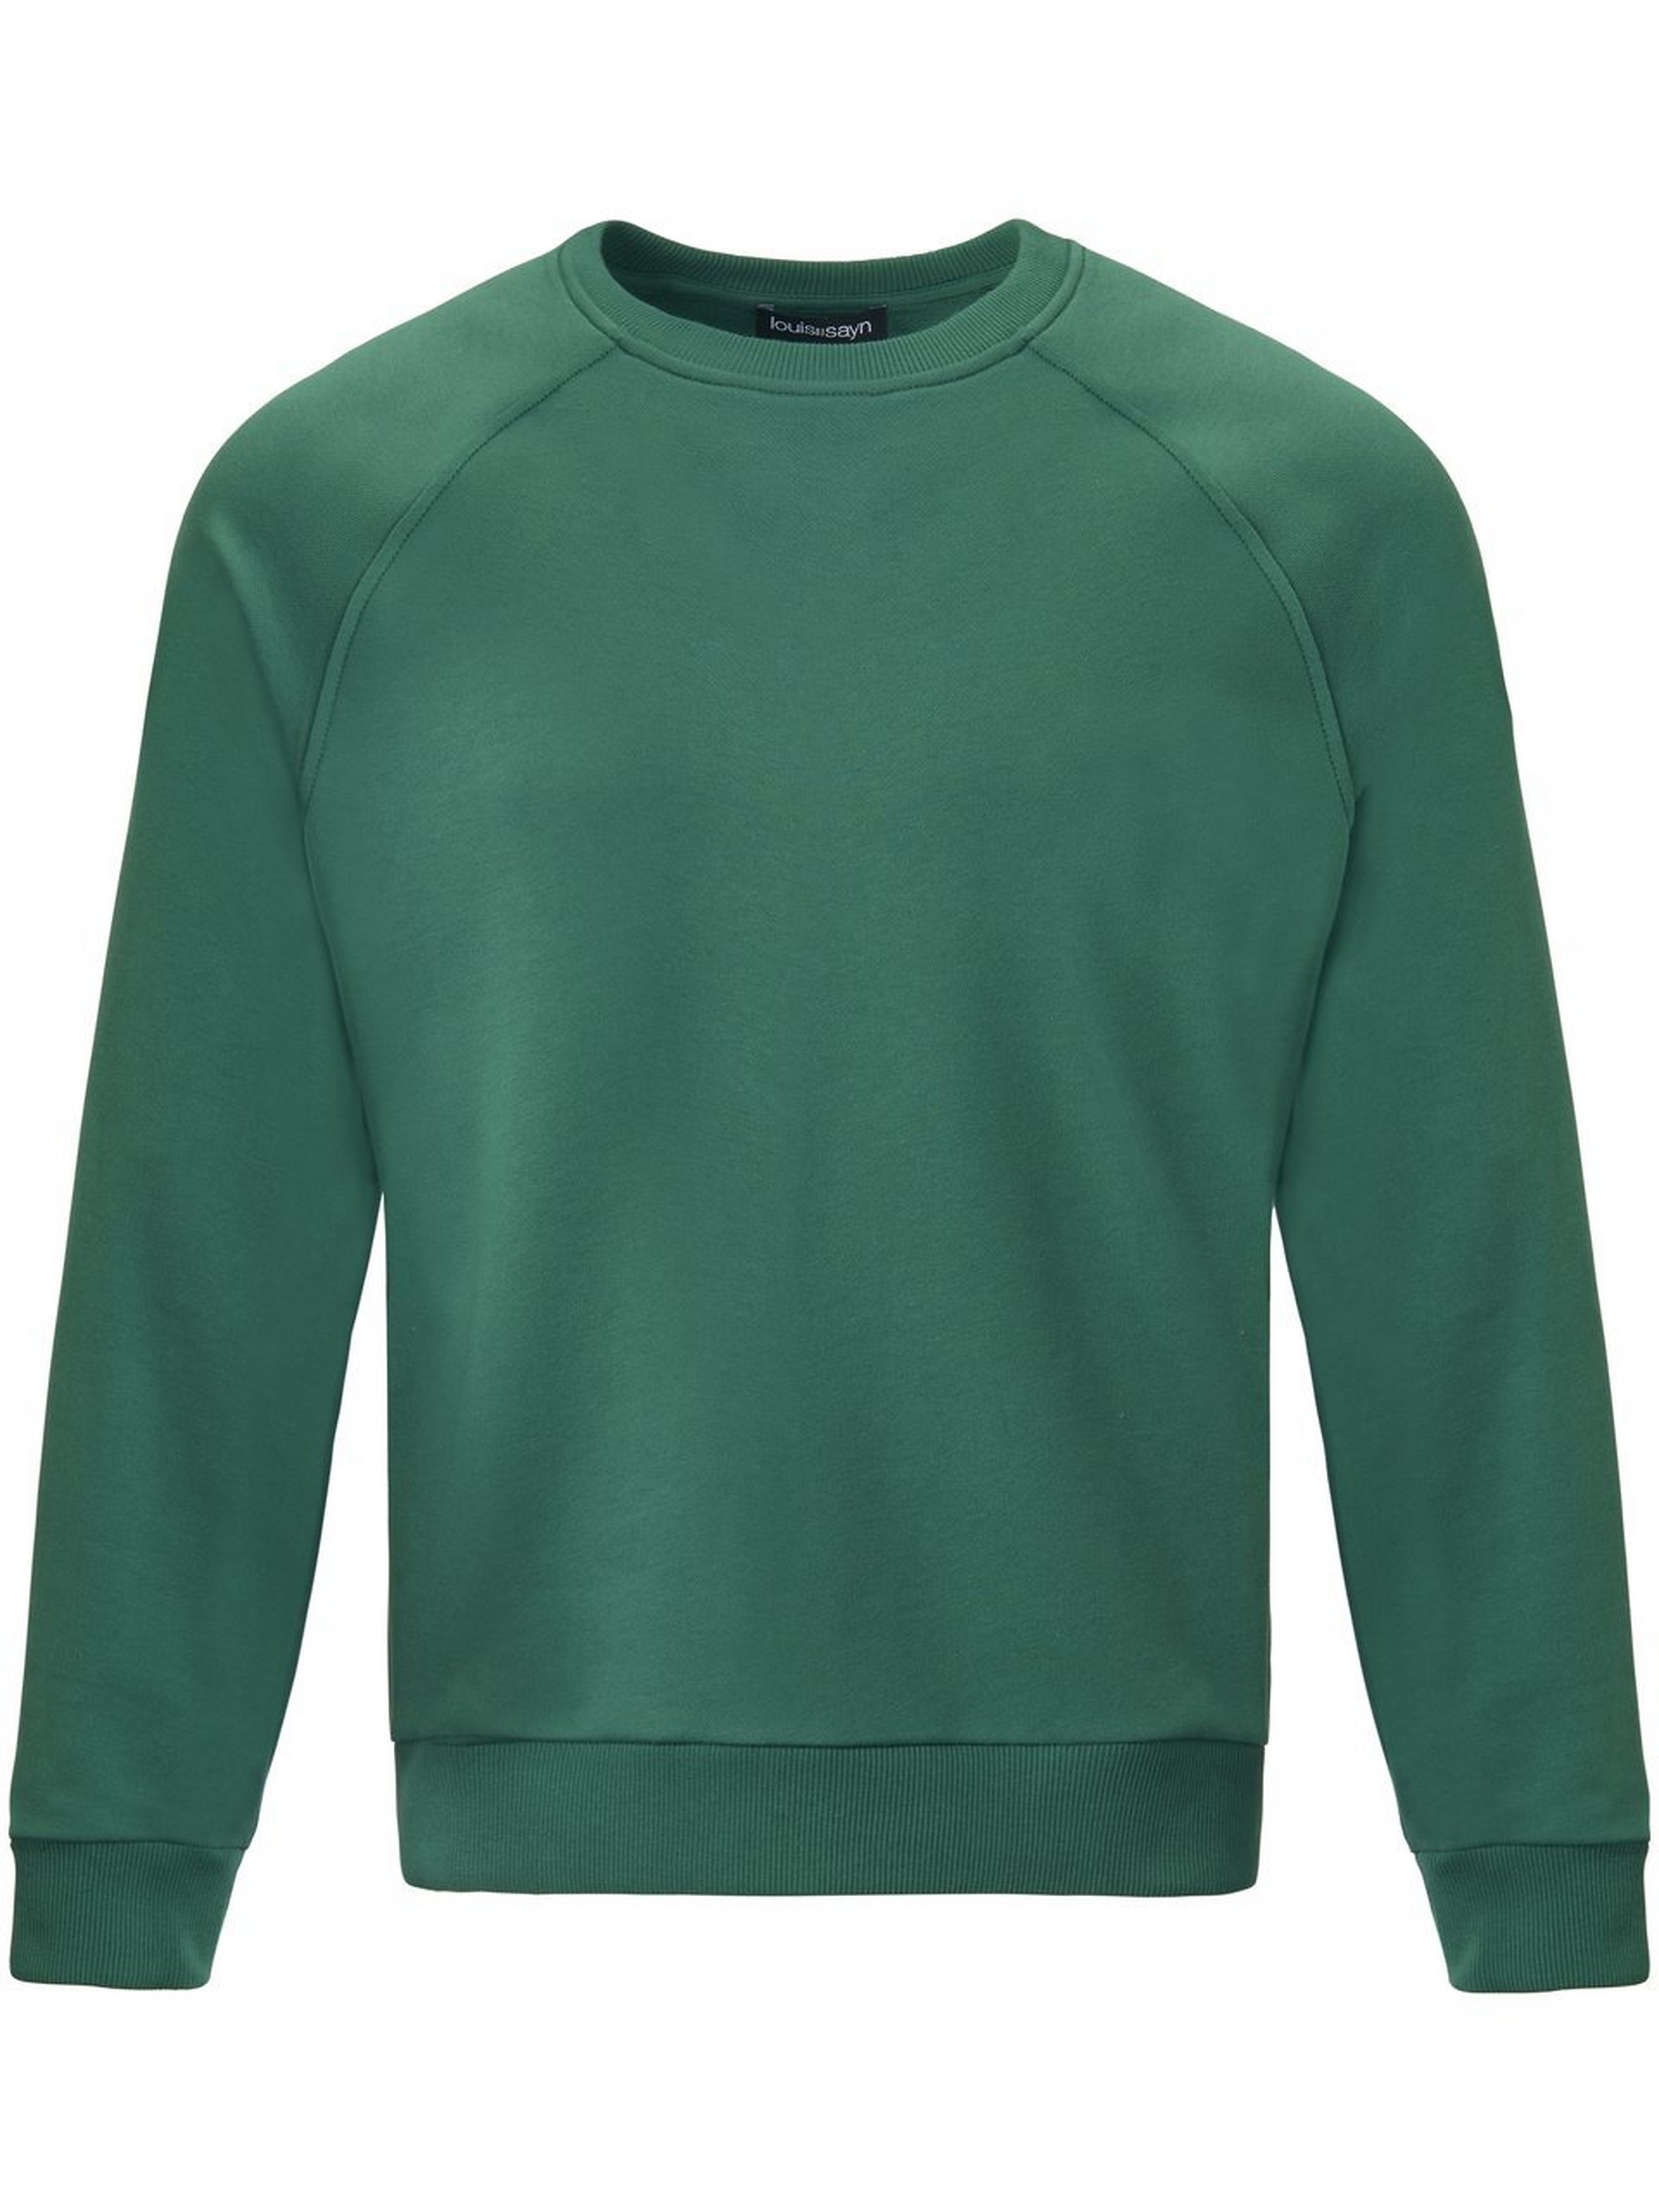 Le sweatshirt 100% coton  Louis Sayn vert